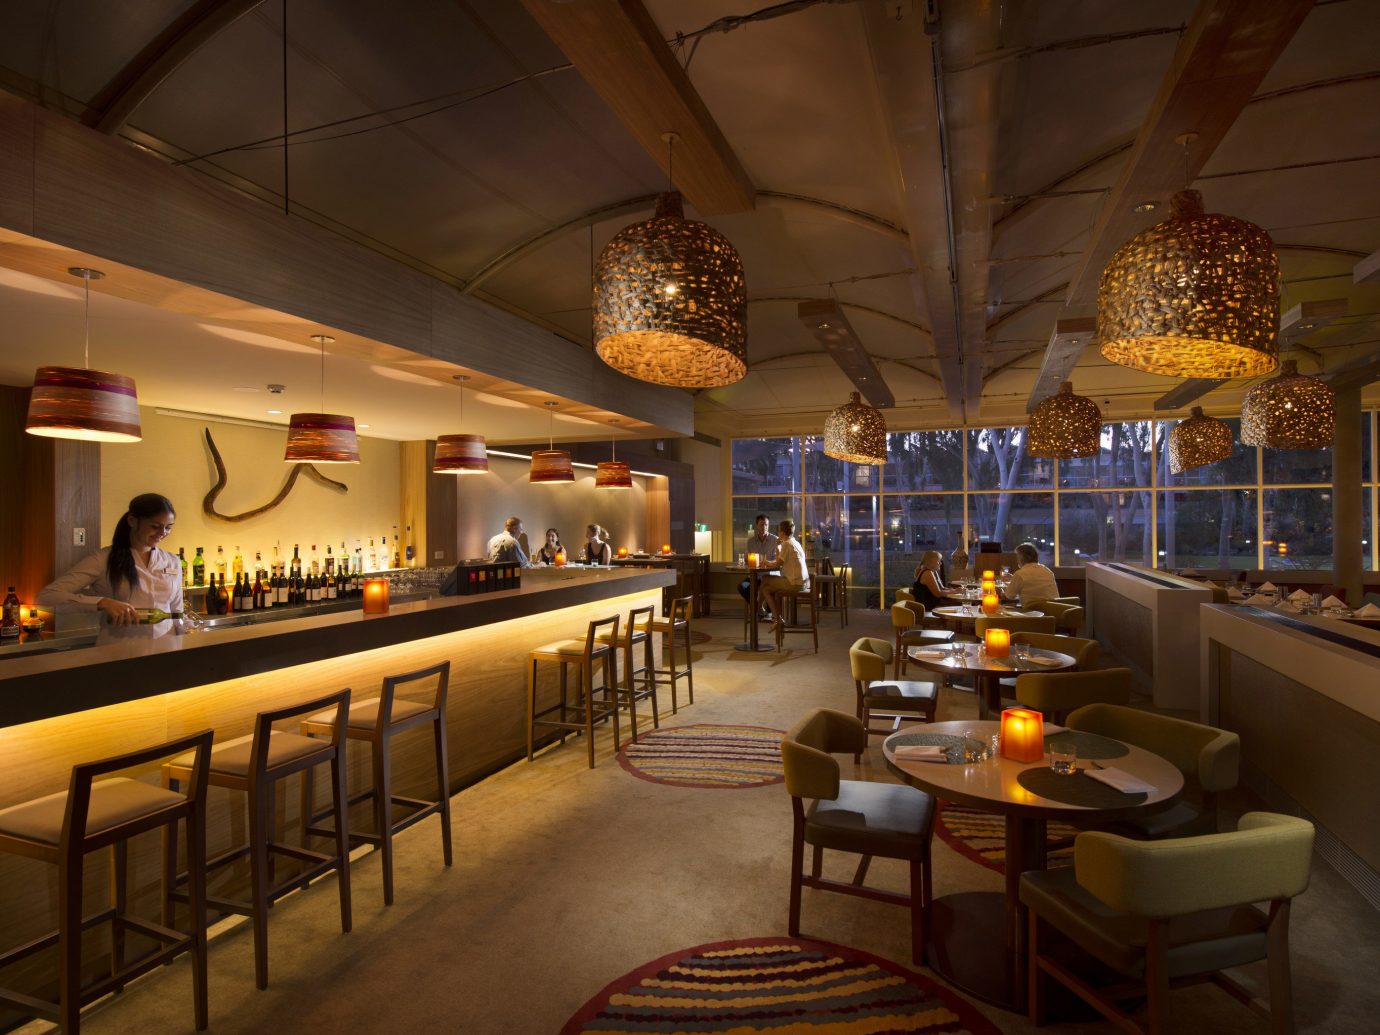 Hotels Offbeat indoor ceiling restaurant interior design function hall Bar several